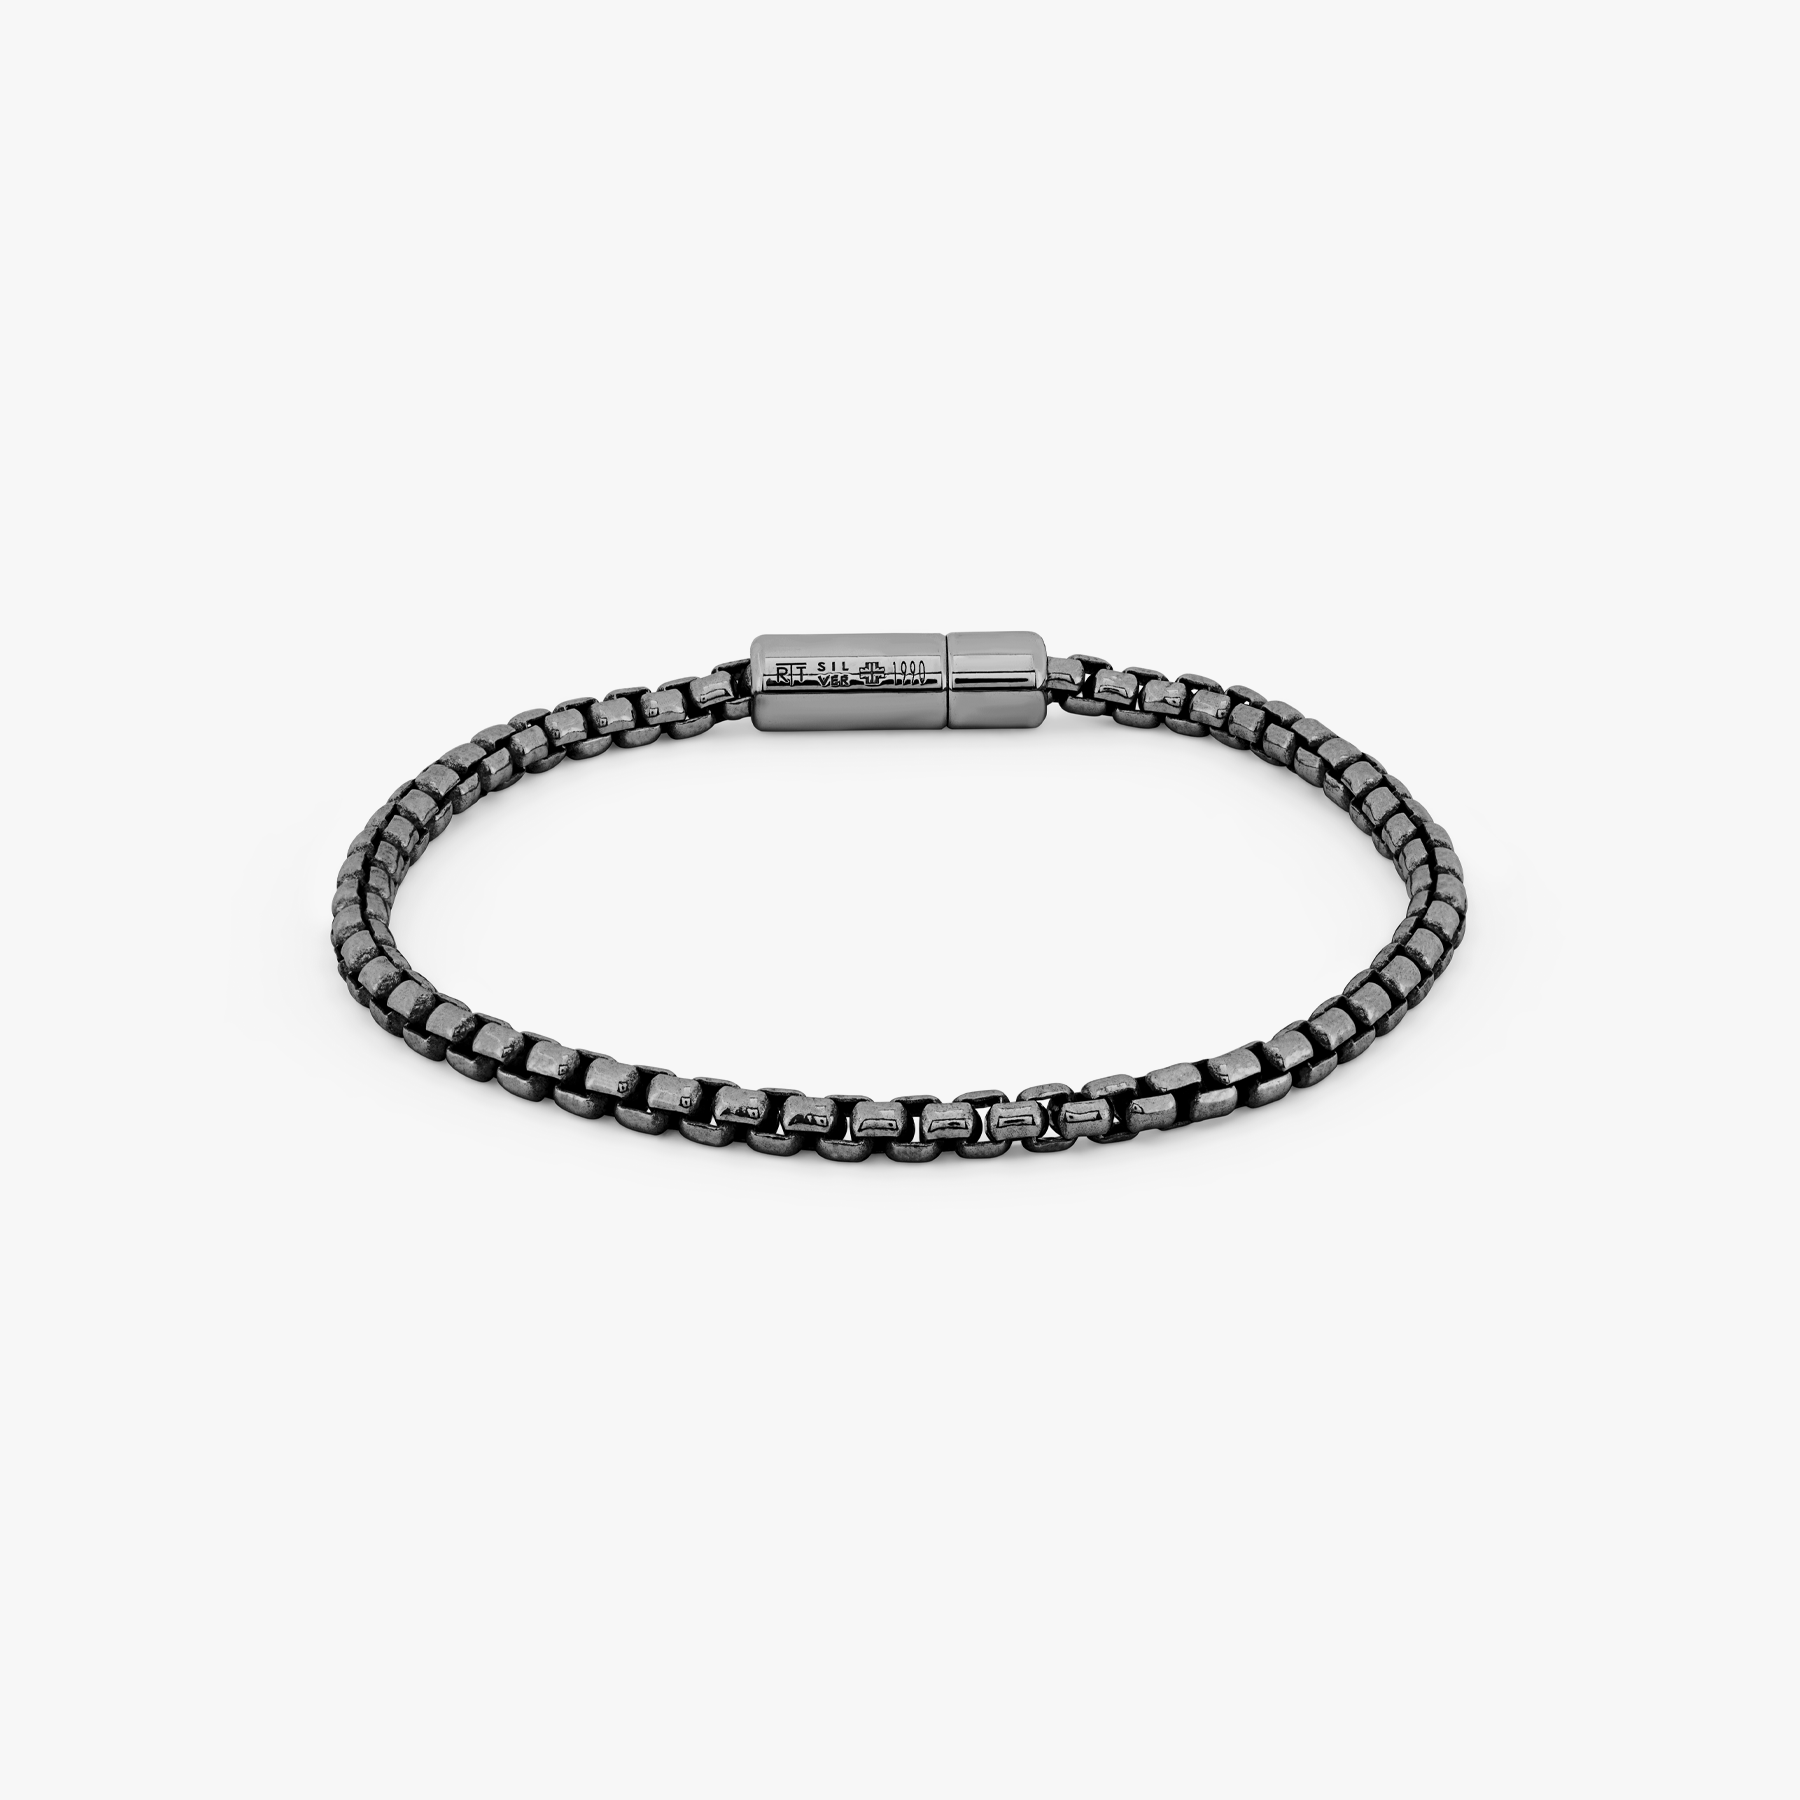 Novel Box Slim Bracelet & Watch Jewelry Display Ramp, Bracelet Holder  Display, Slim and Sleek Bracelet Ramps Display, 8.25 X 2 dimension -  Beige Linen 2-Pack 